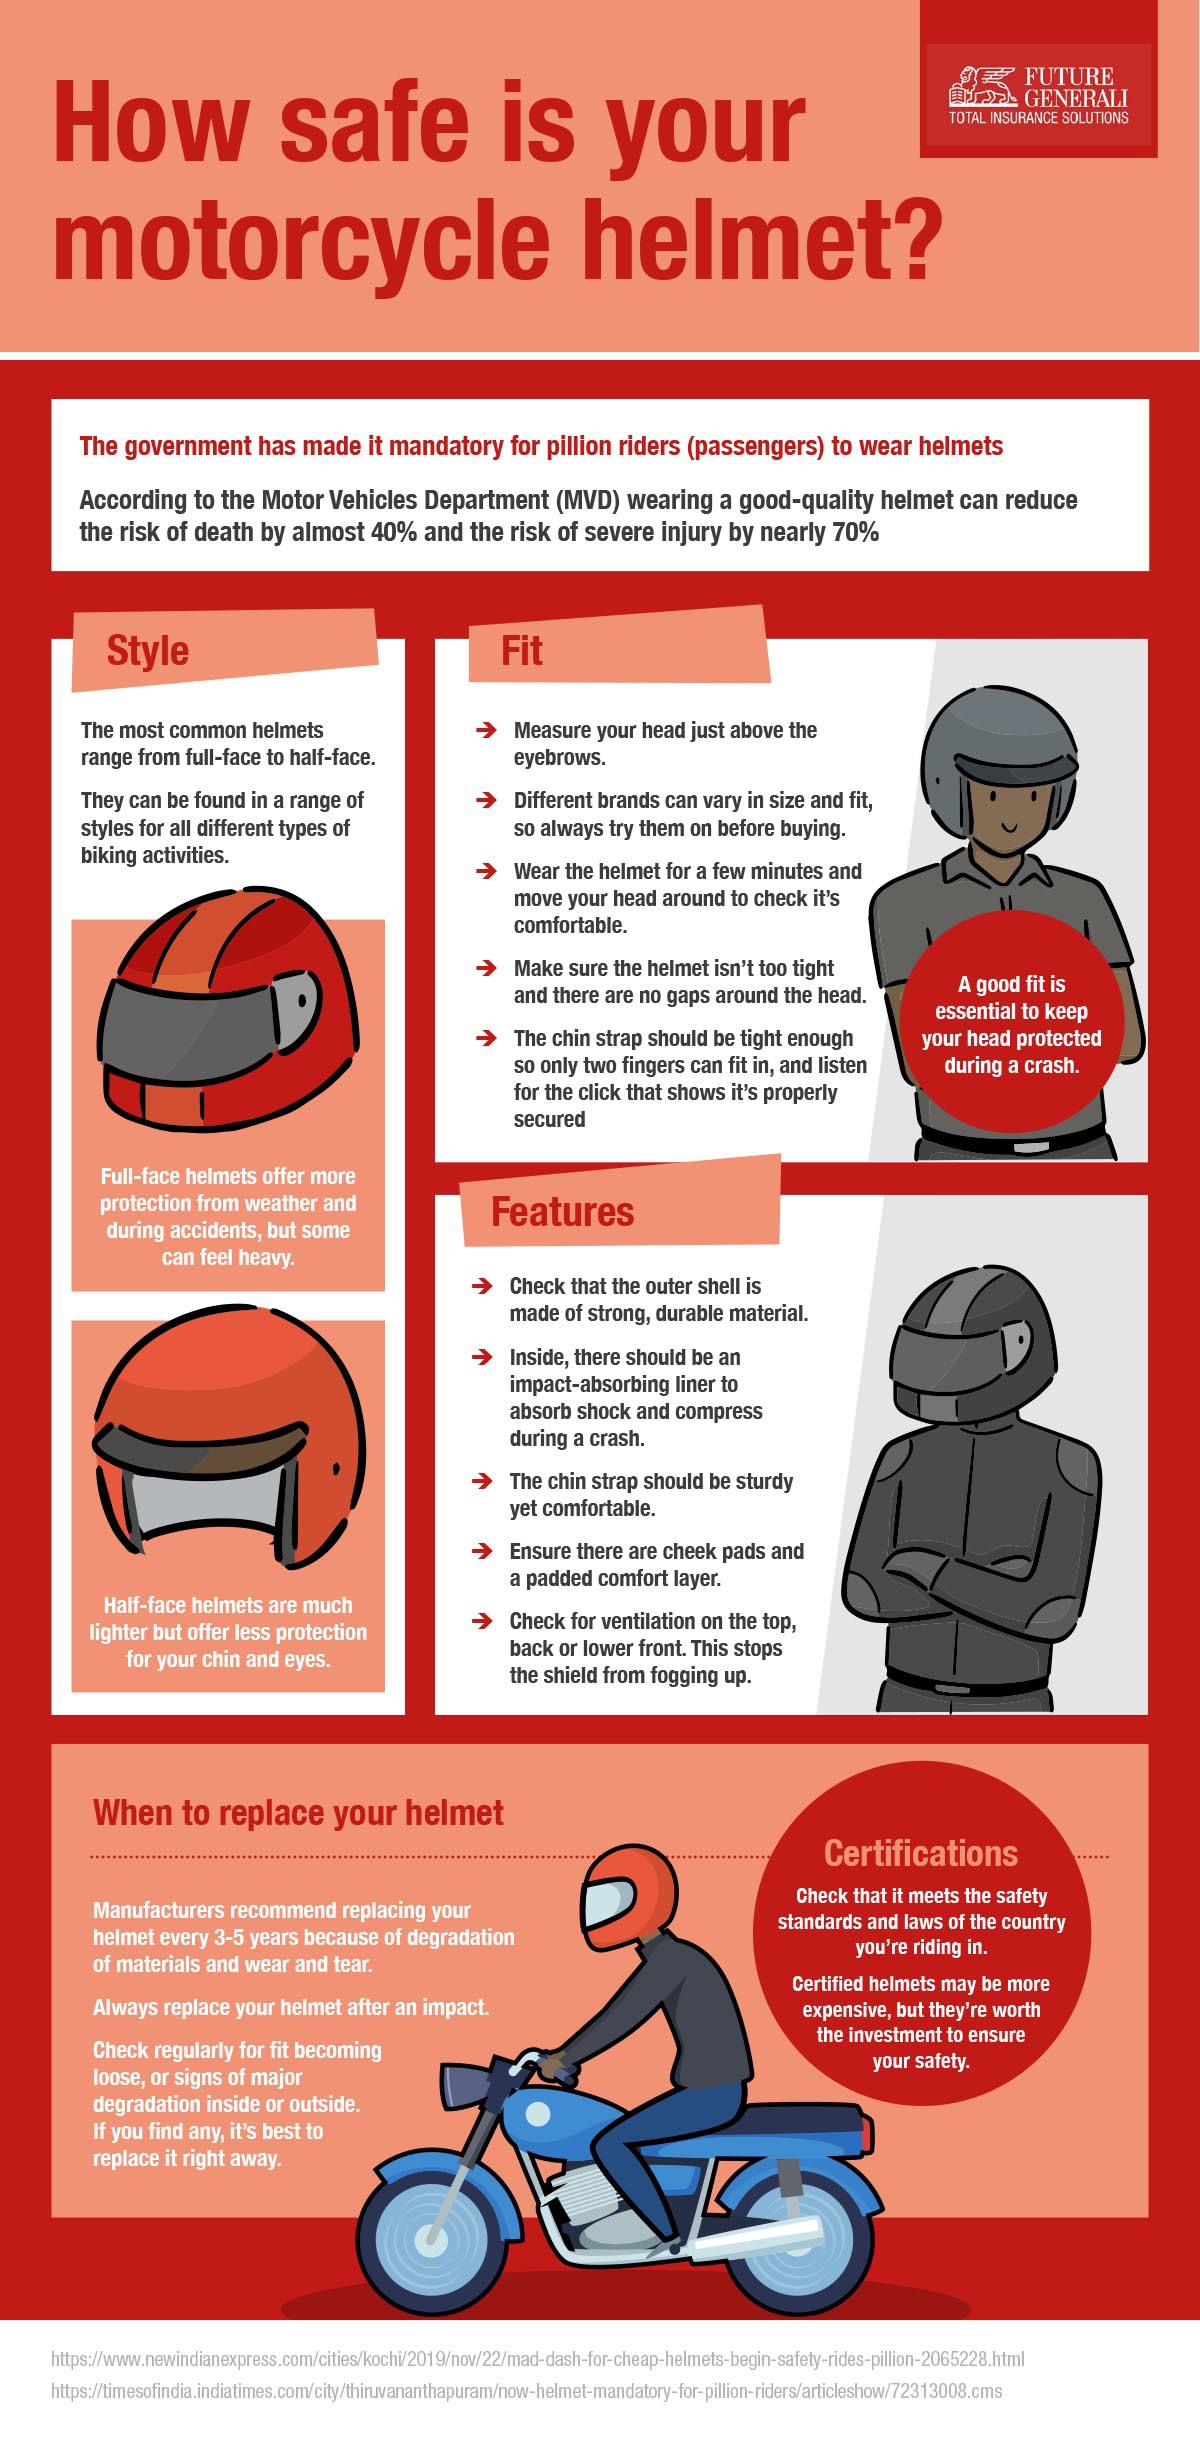 Generali_Motorcycle_Helmet_Infographic_INDIA.jpg